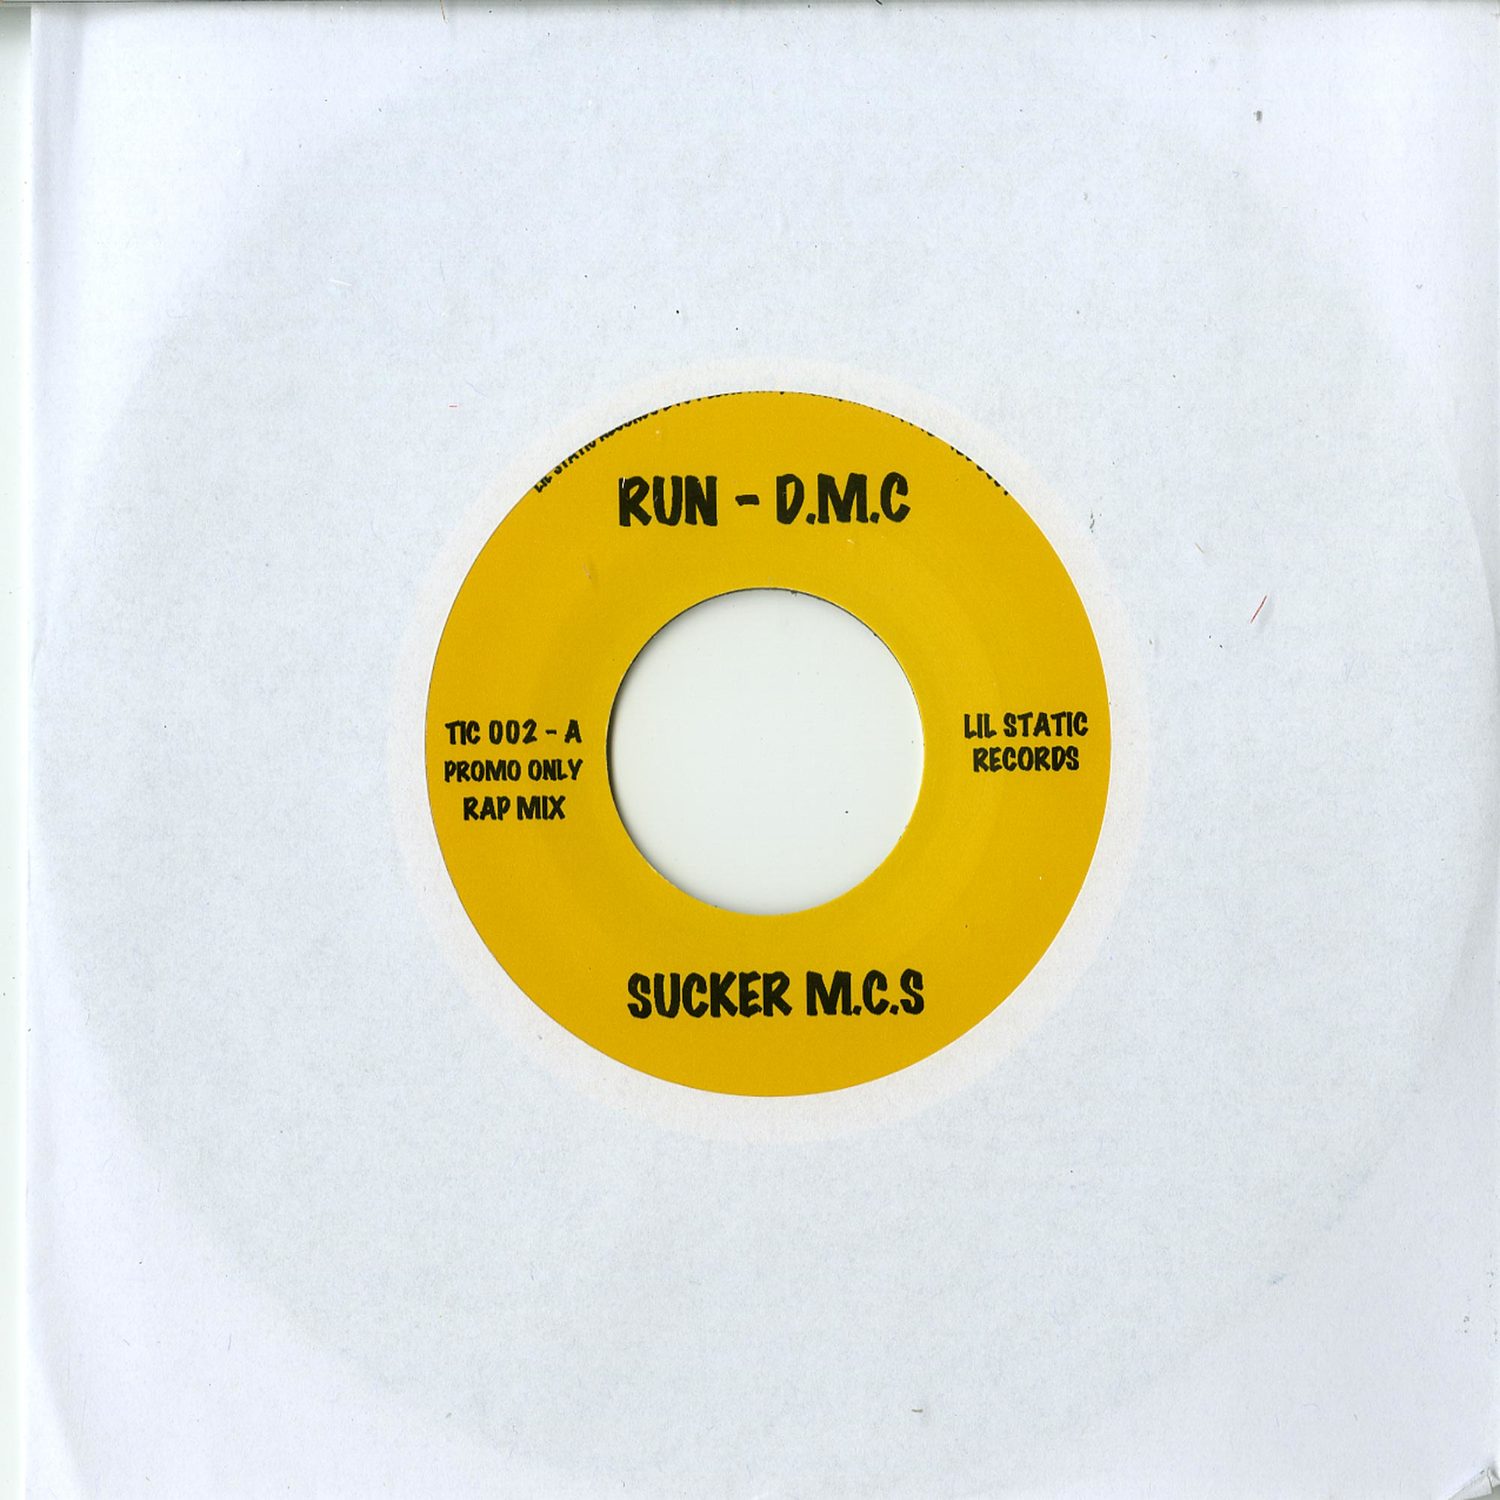 Run DMC - SUCKER M.C.S 